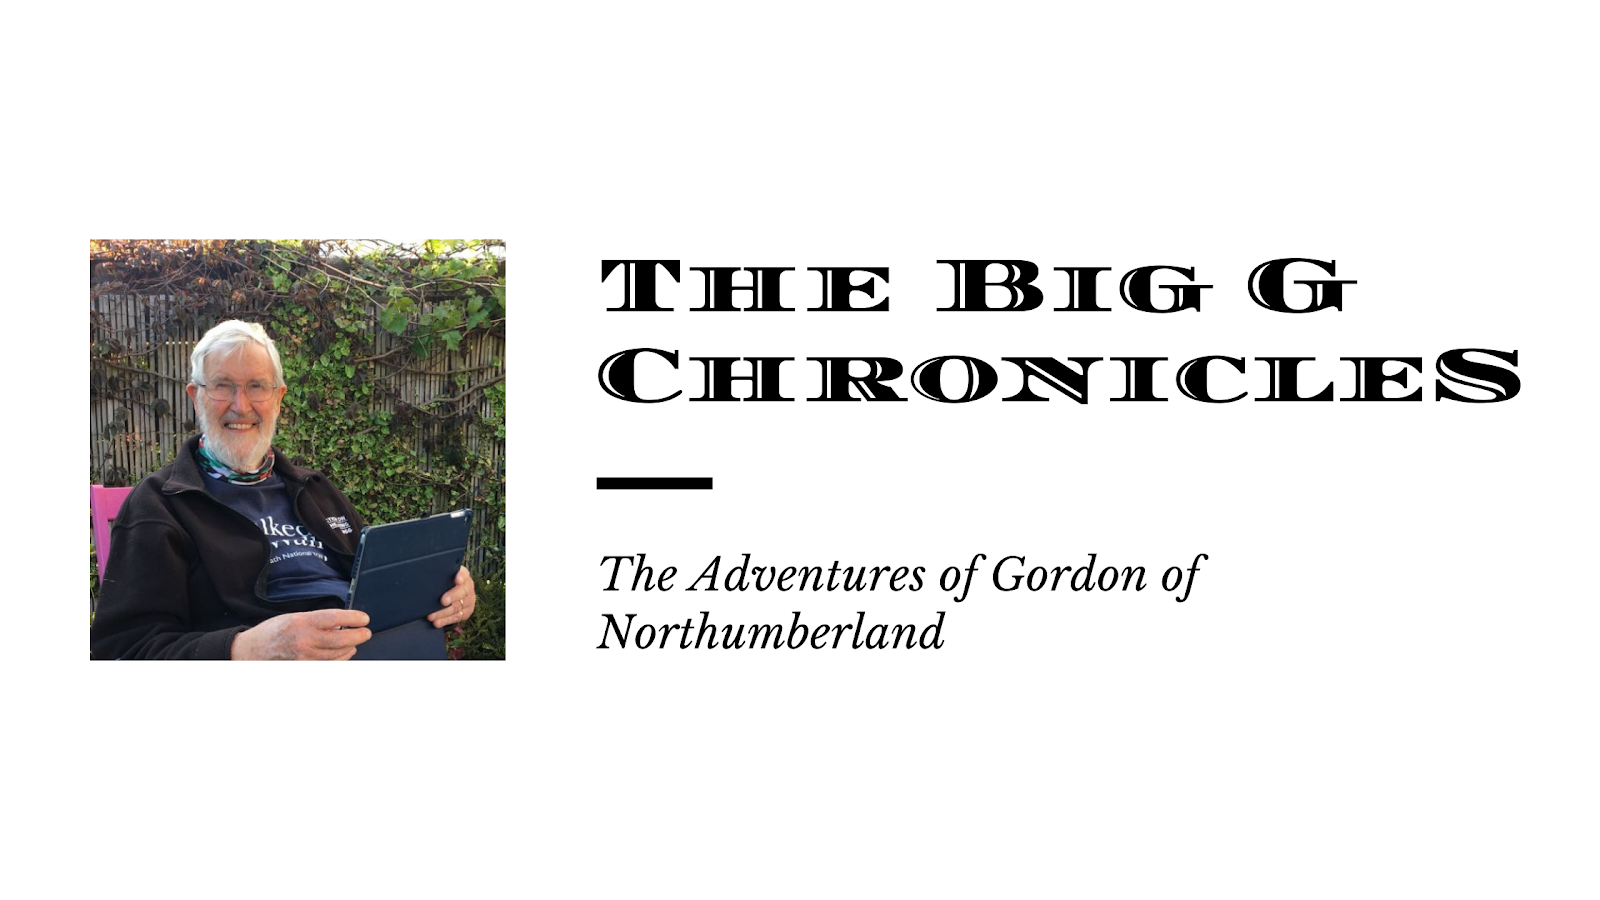 The Big G Chronicles